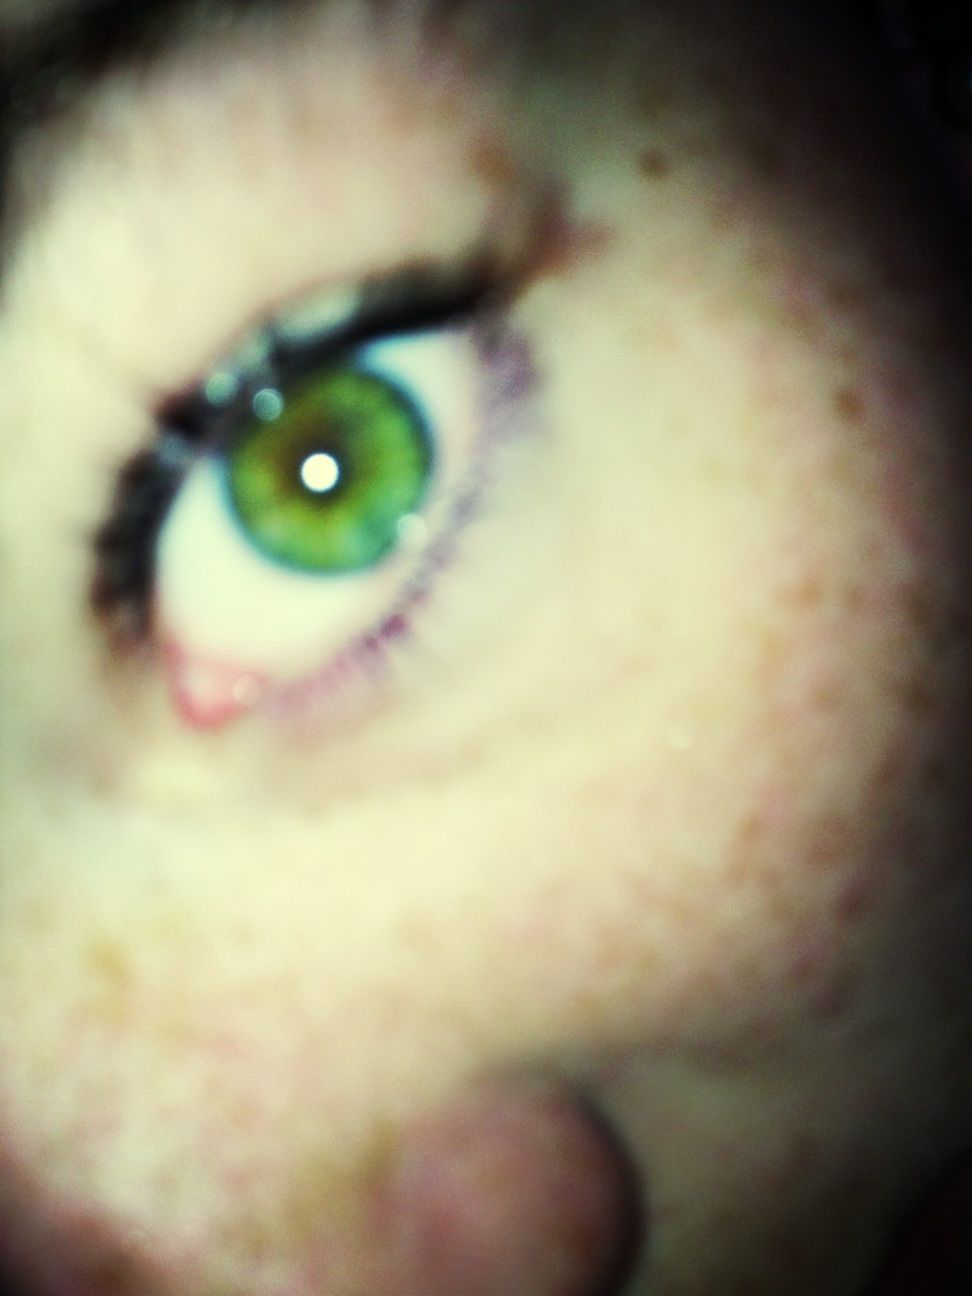 Green eyes with a blue rim. ☺